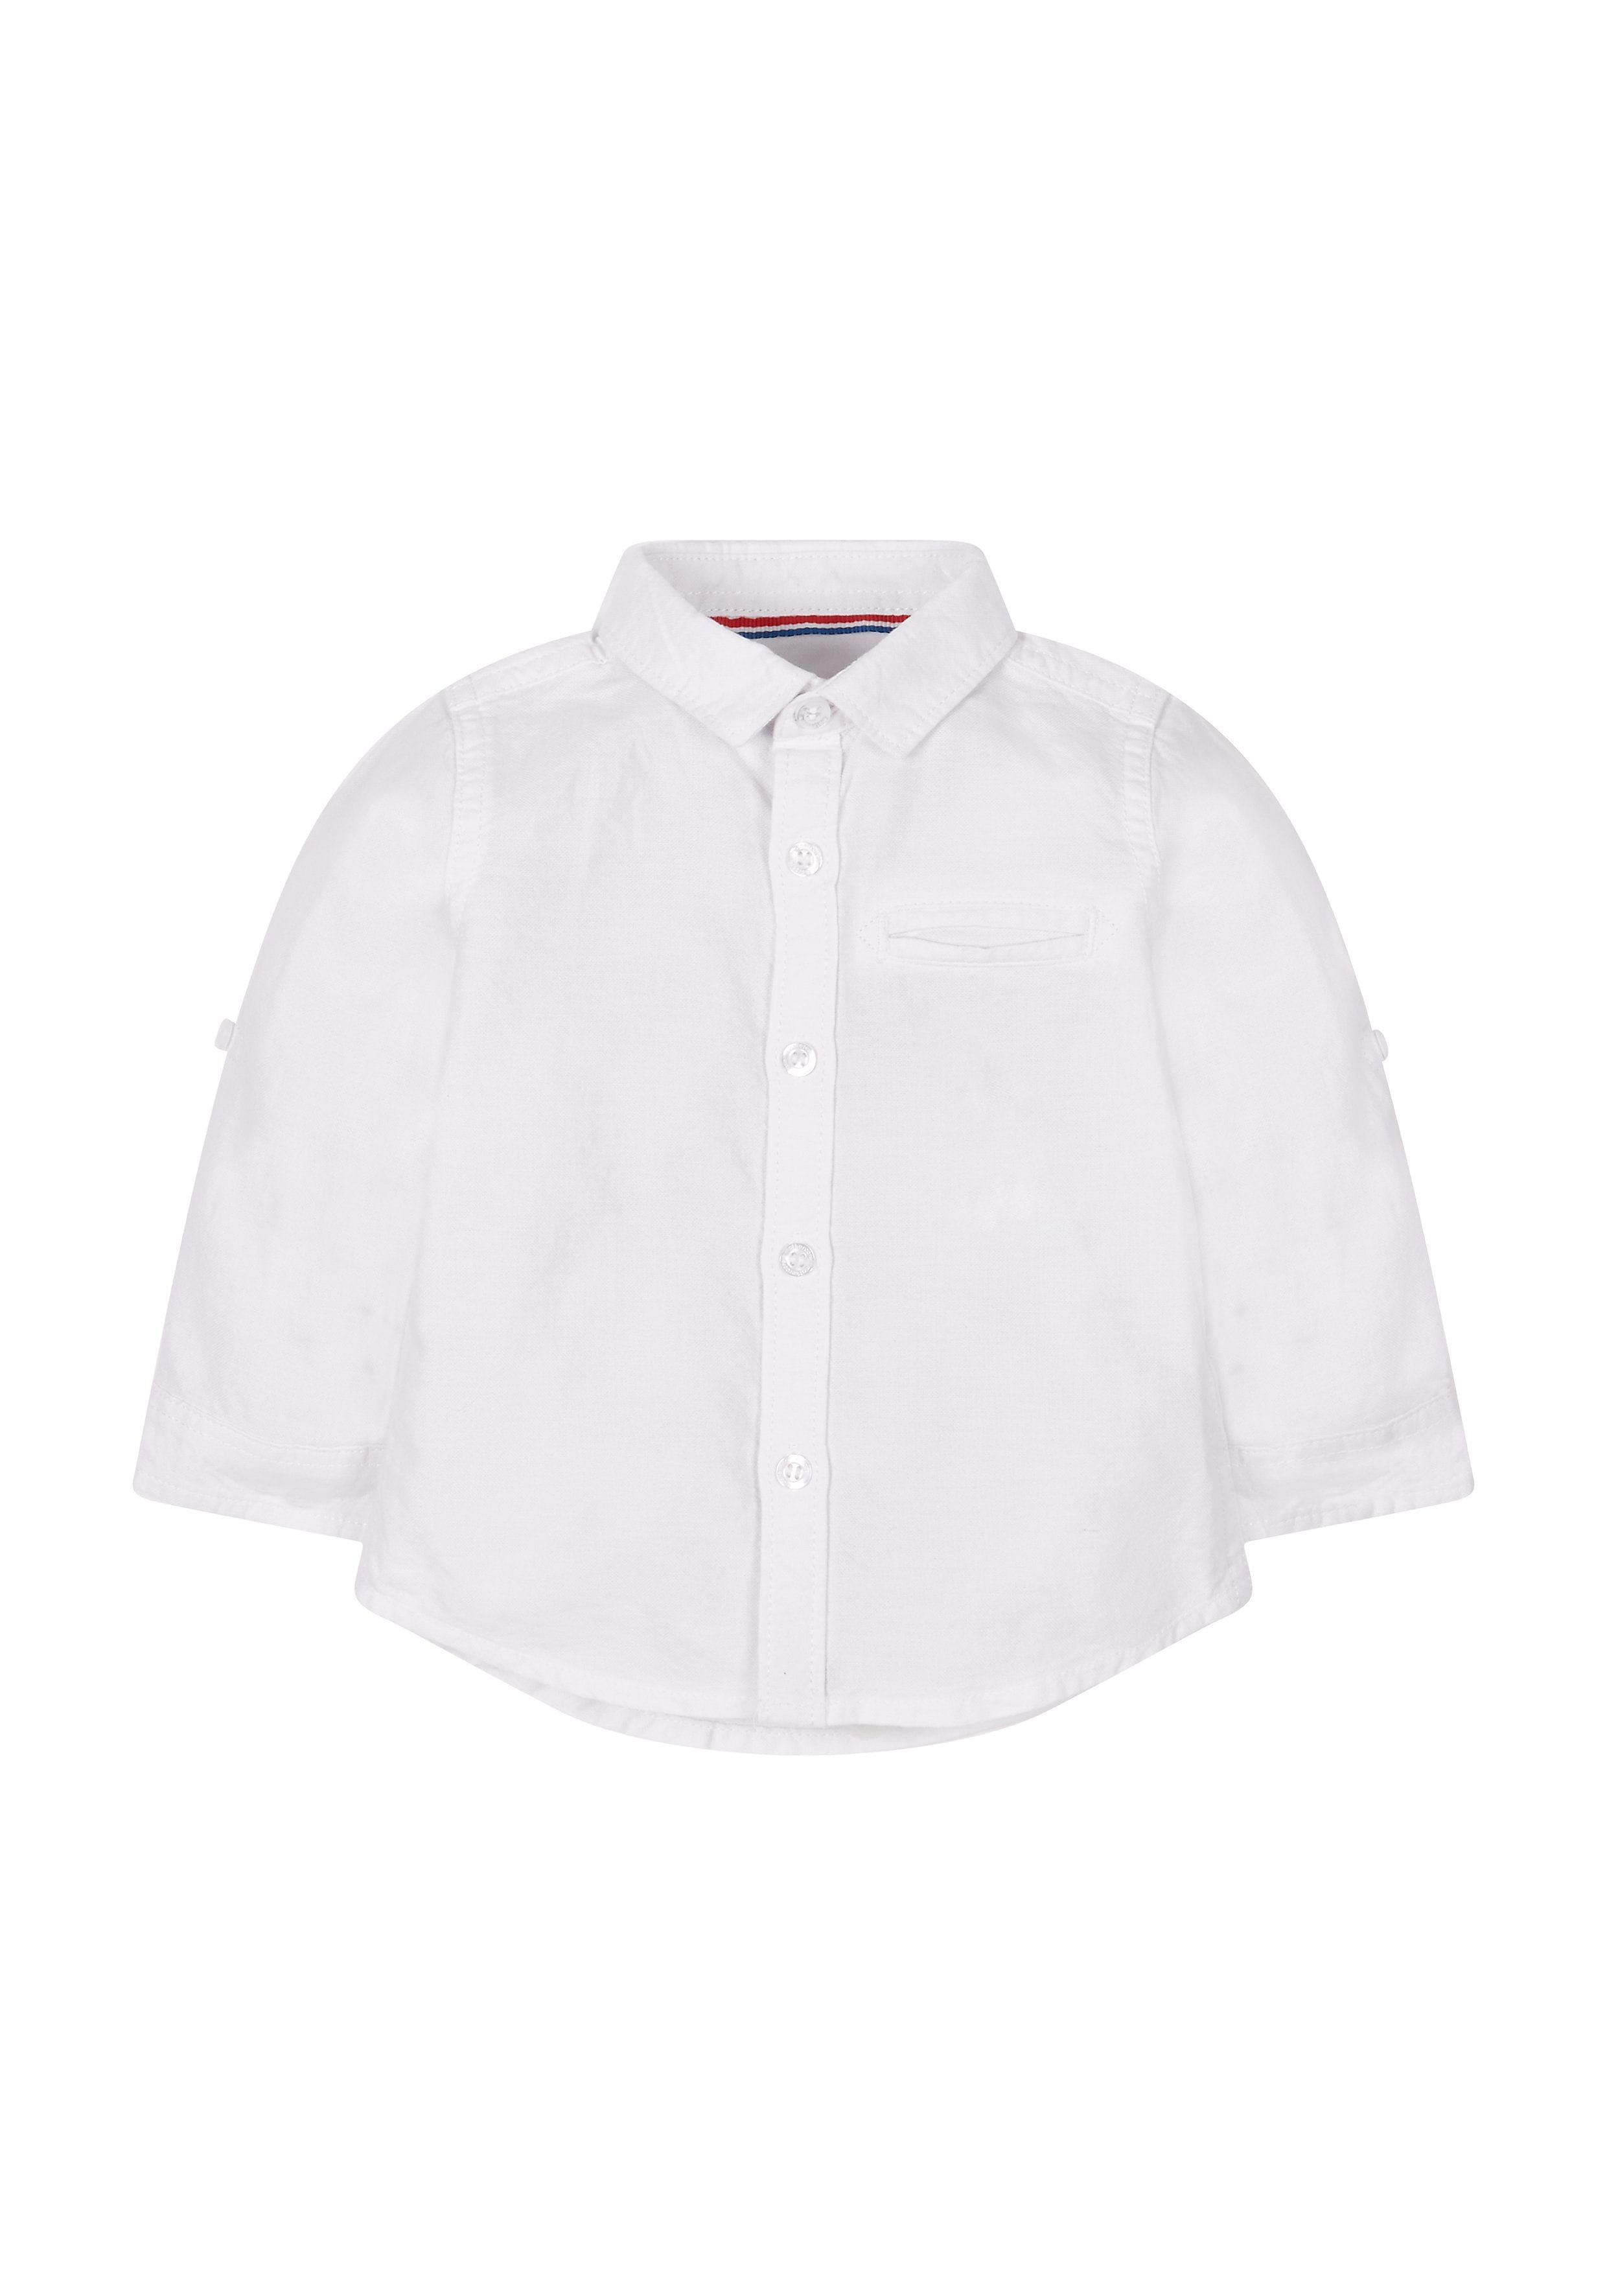 Mothercare | White Oxford Shirt 0